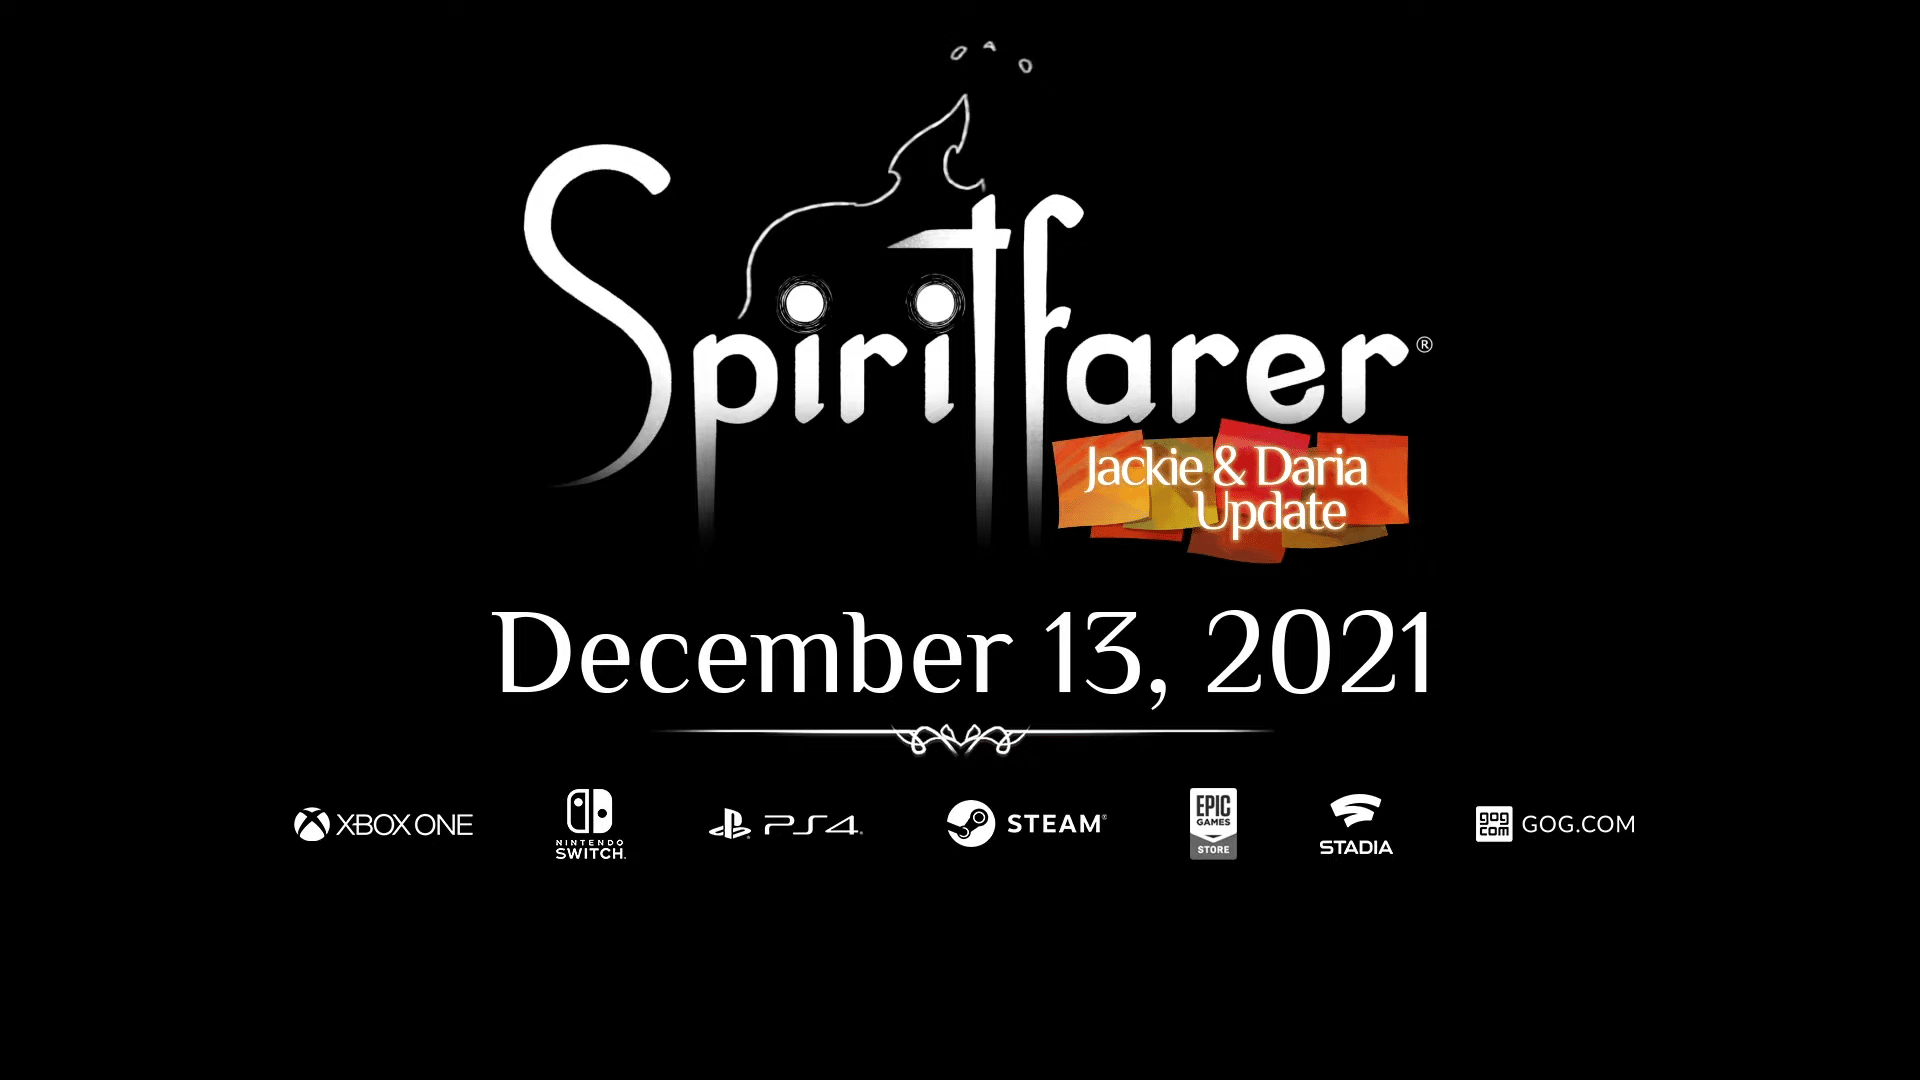 Spiritfarer Jackie & Daria Update launching December 13